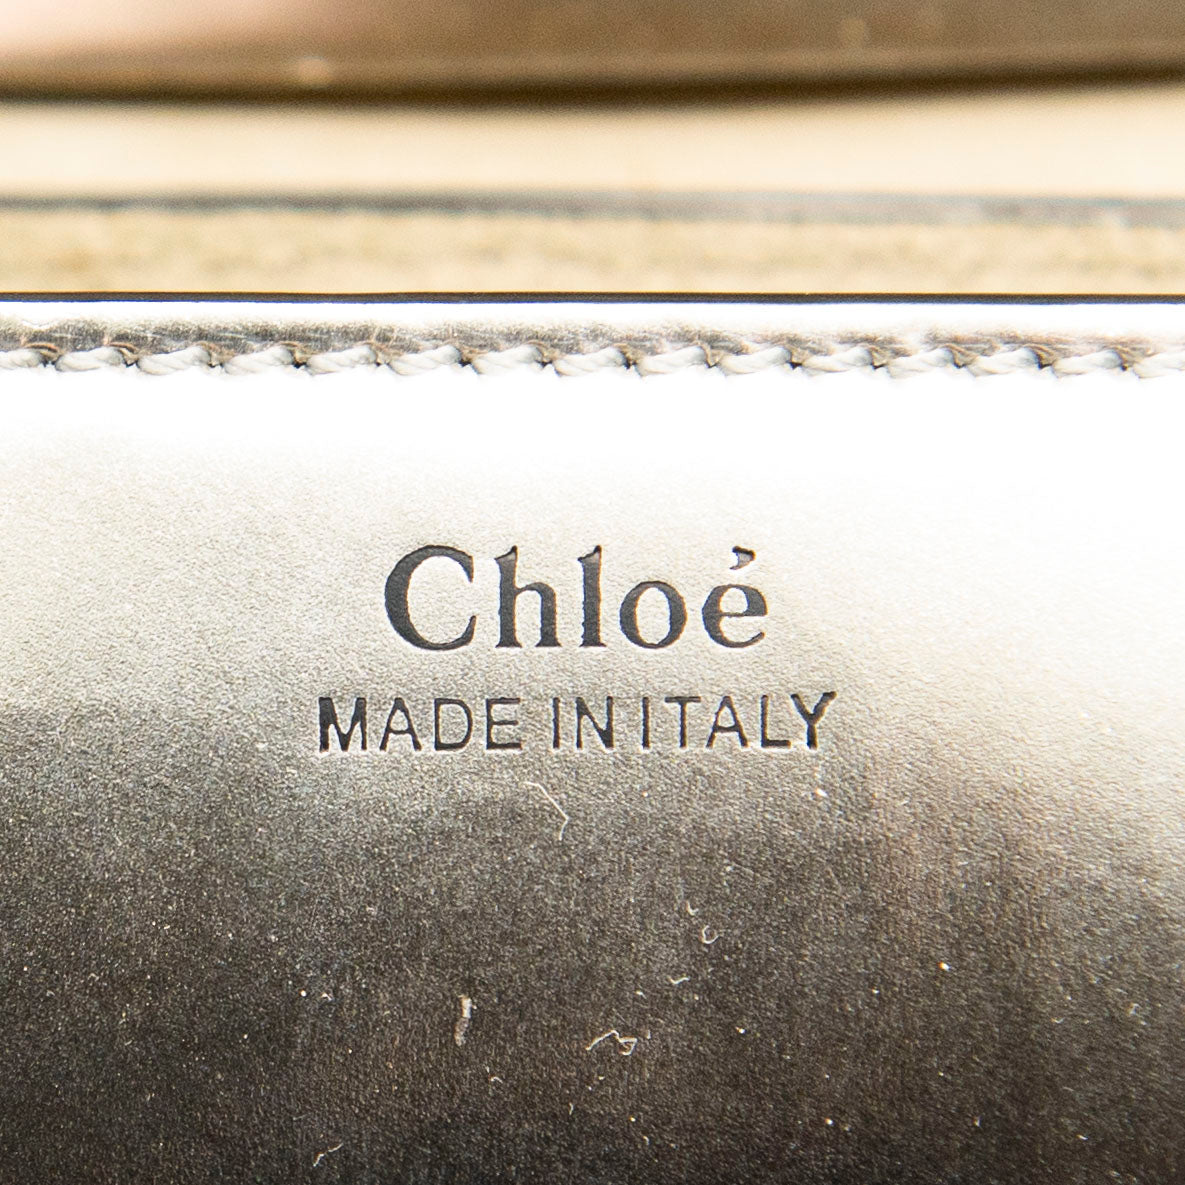 Chloe Metallic Gold Nano Drew Bag